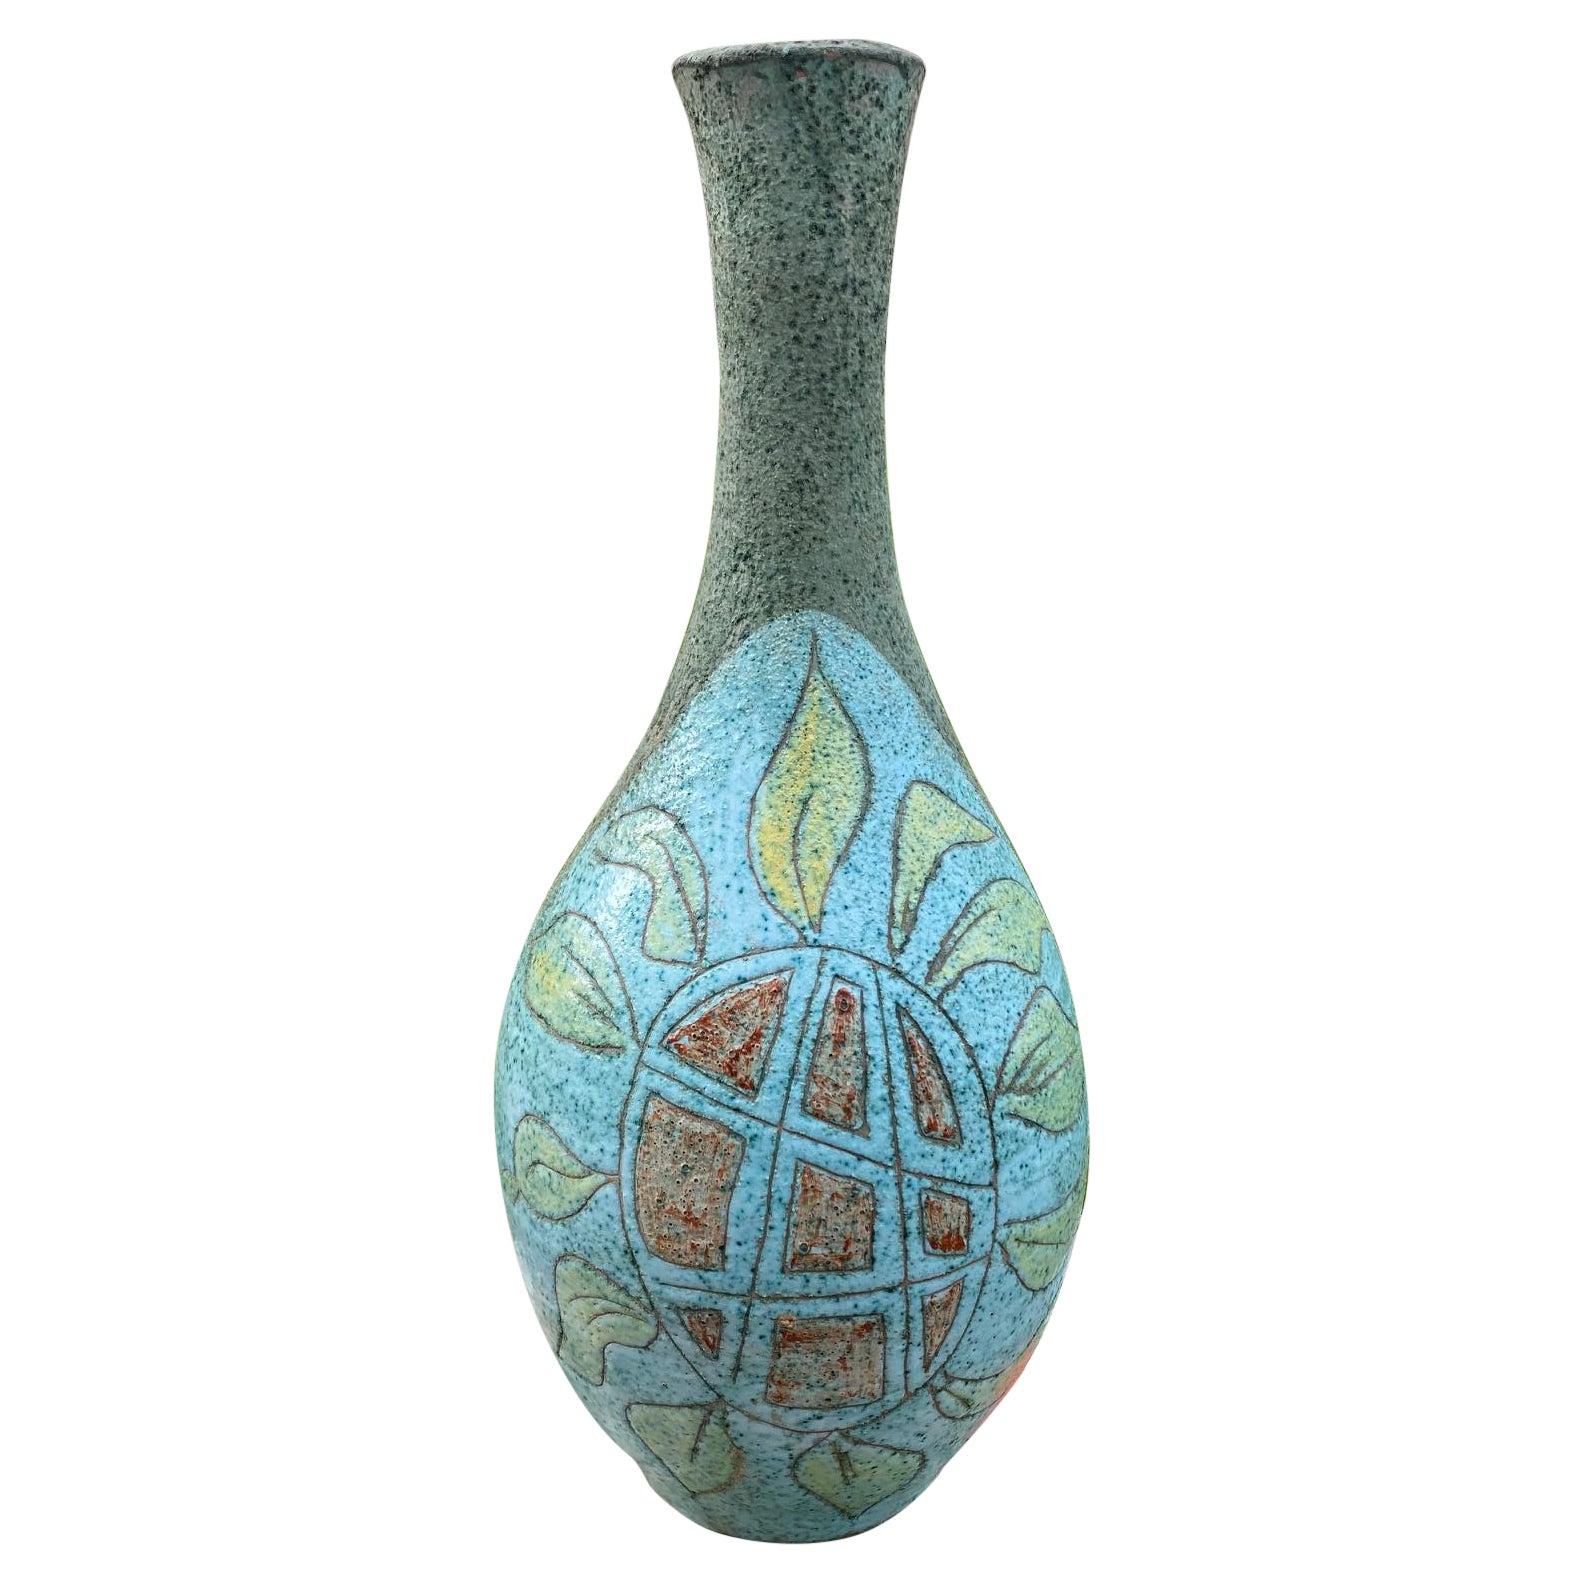 Ceramic Vase by Gilbert Valentin / Les Archanges, Vallauris, France, 1960s